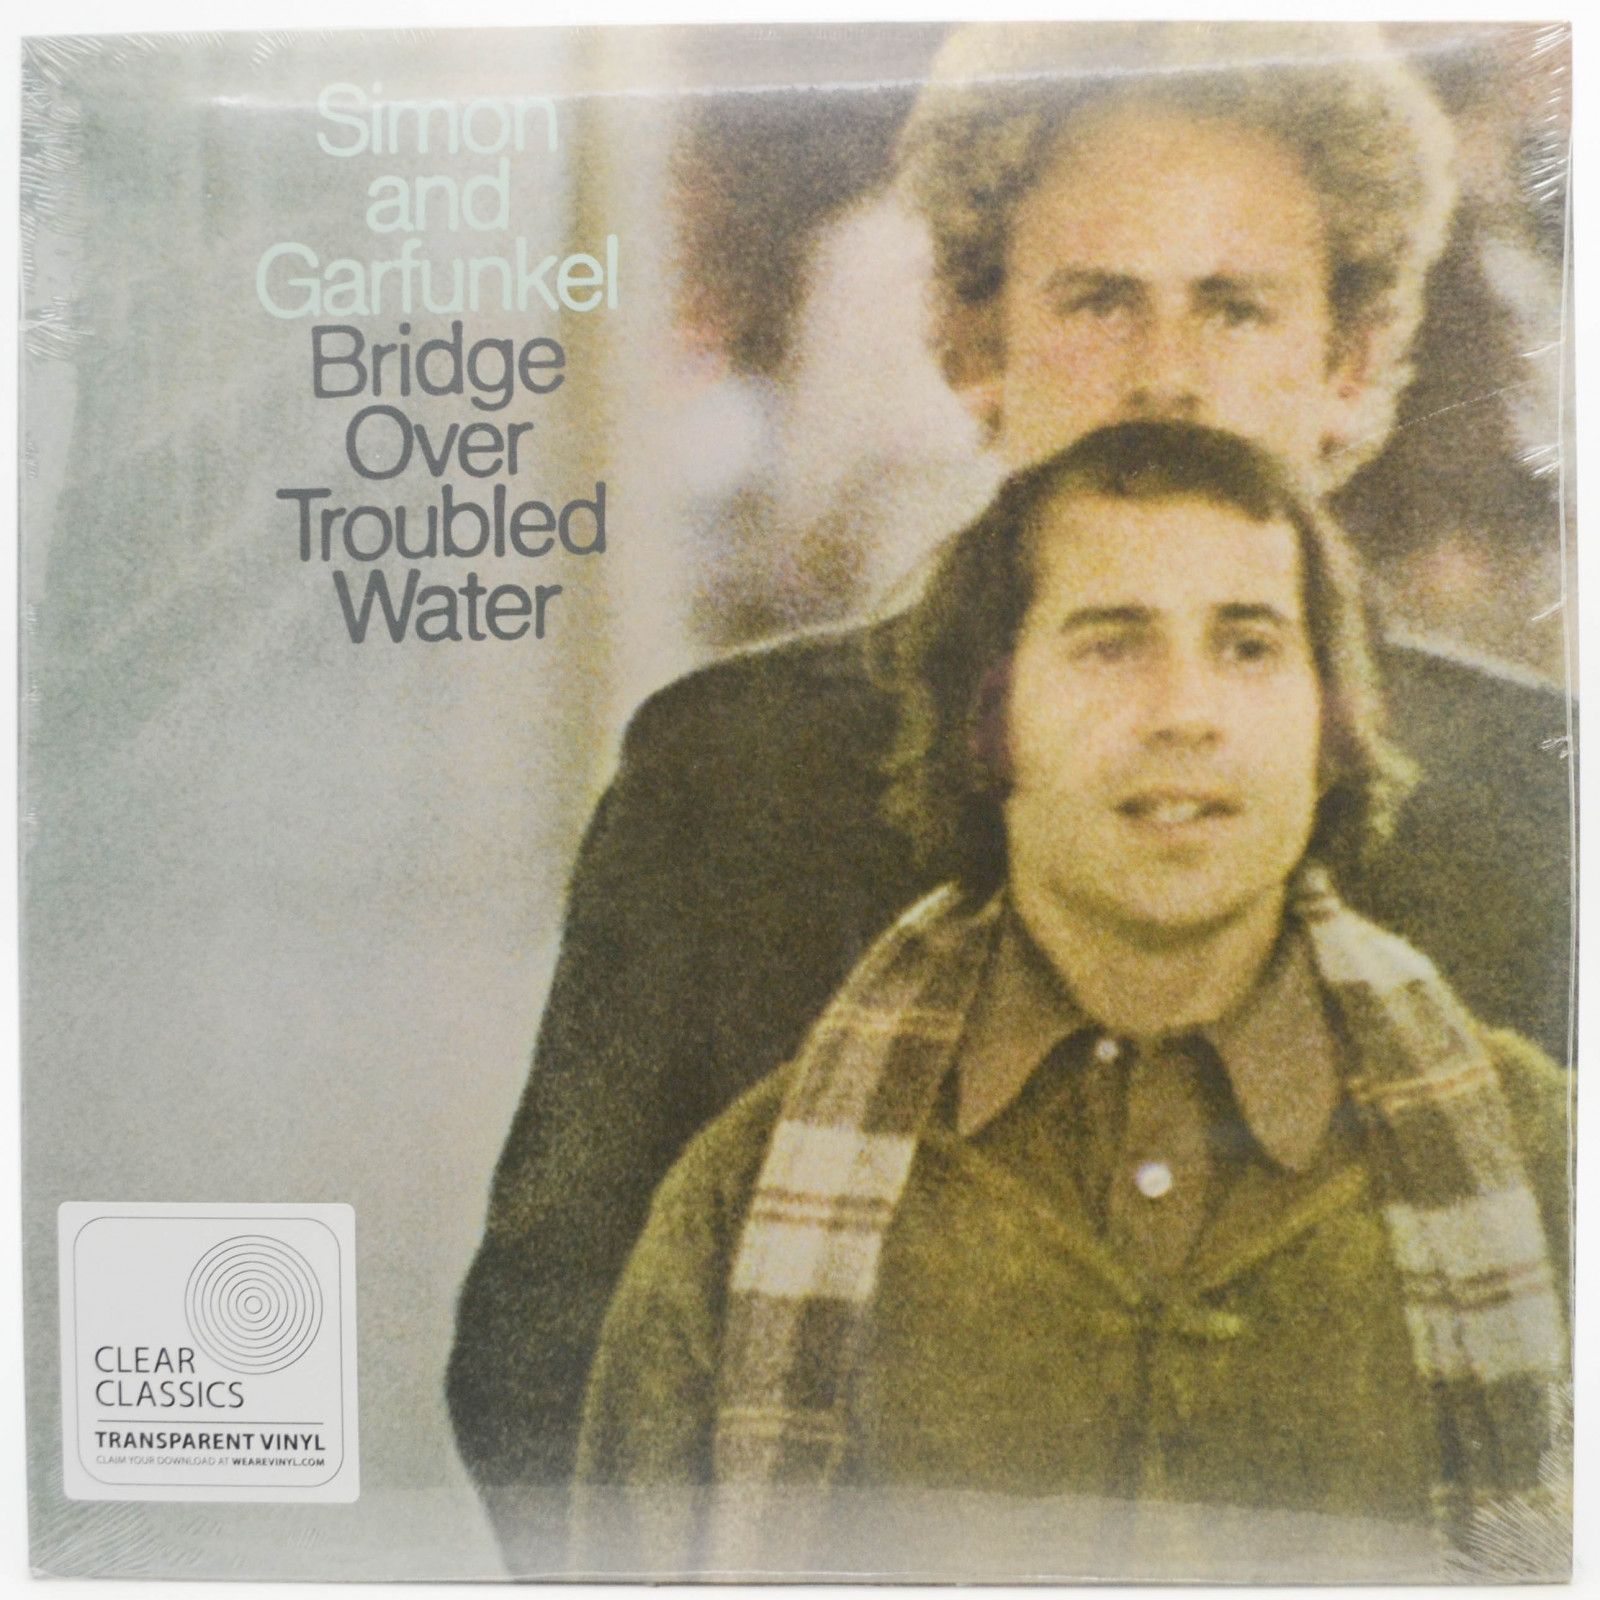 Simon & Garfunkel — Bridge Over Troubled Water, 1970